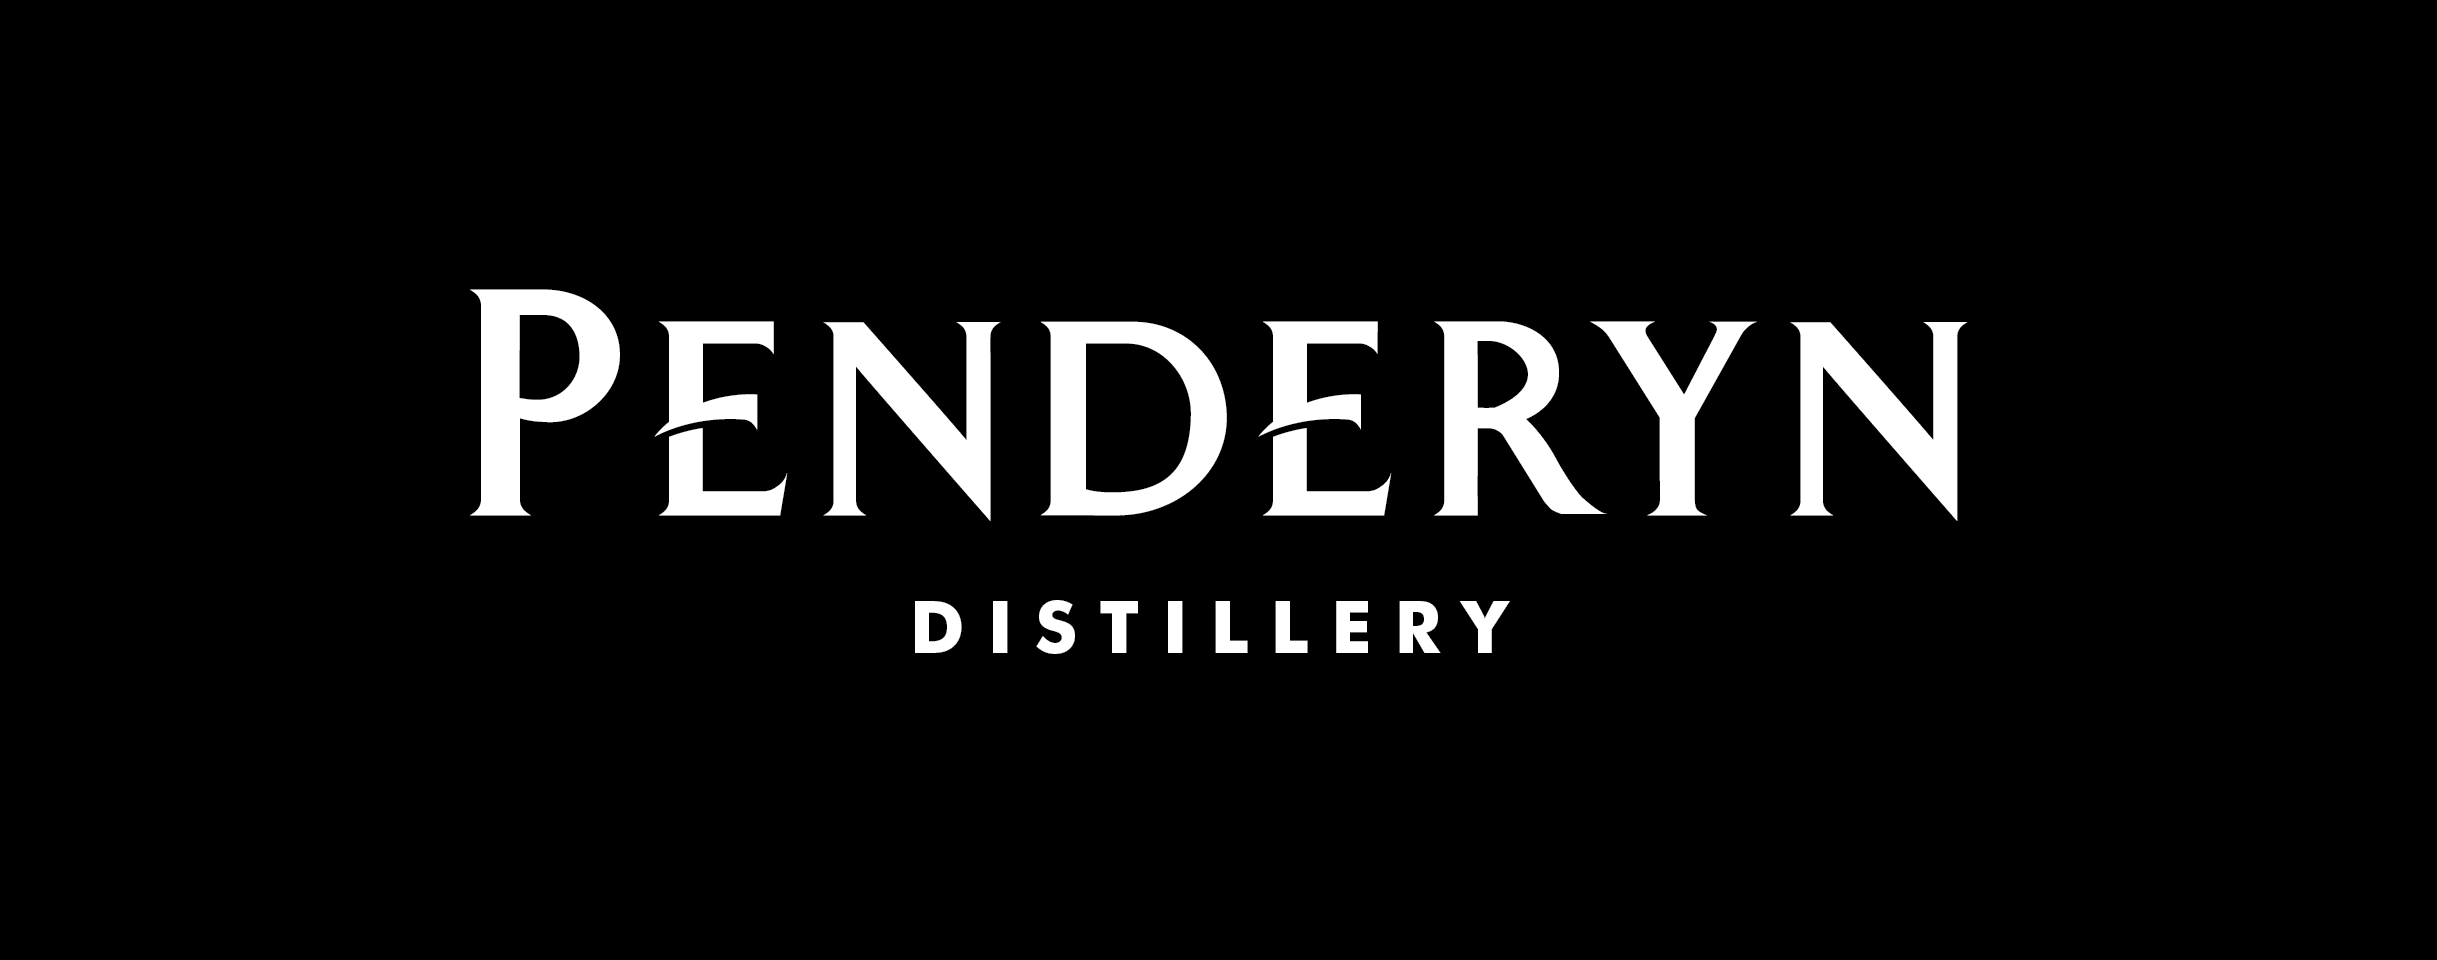 Penderyn Distillery logo